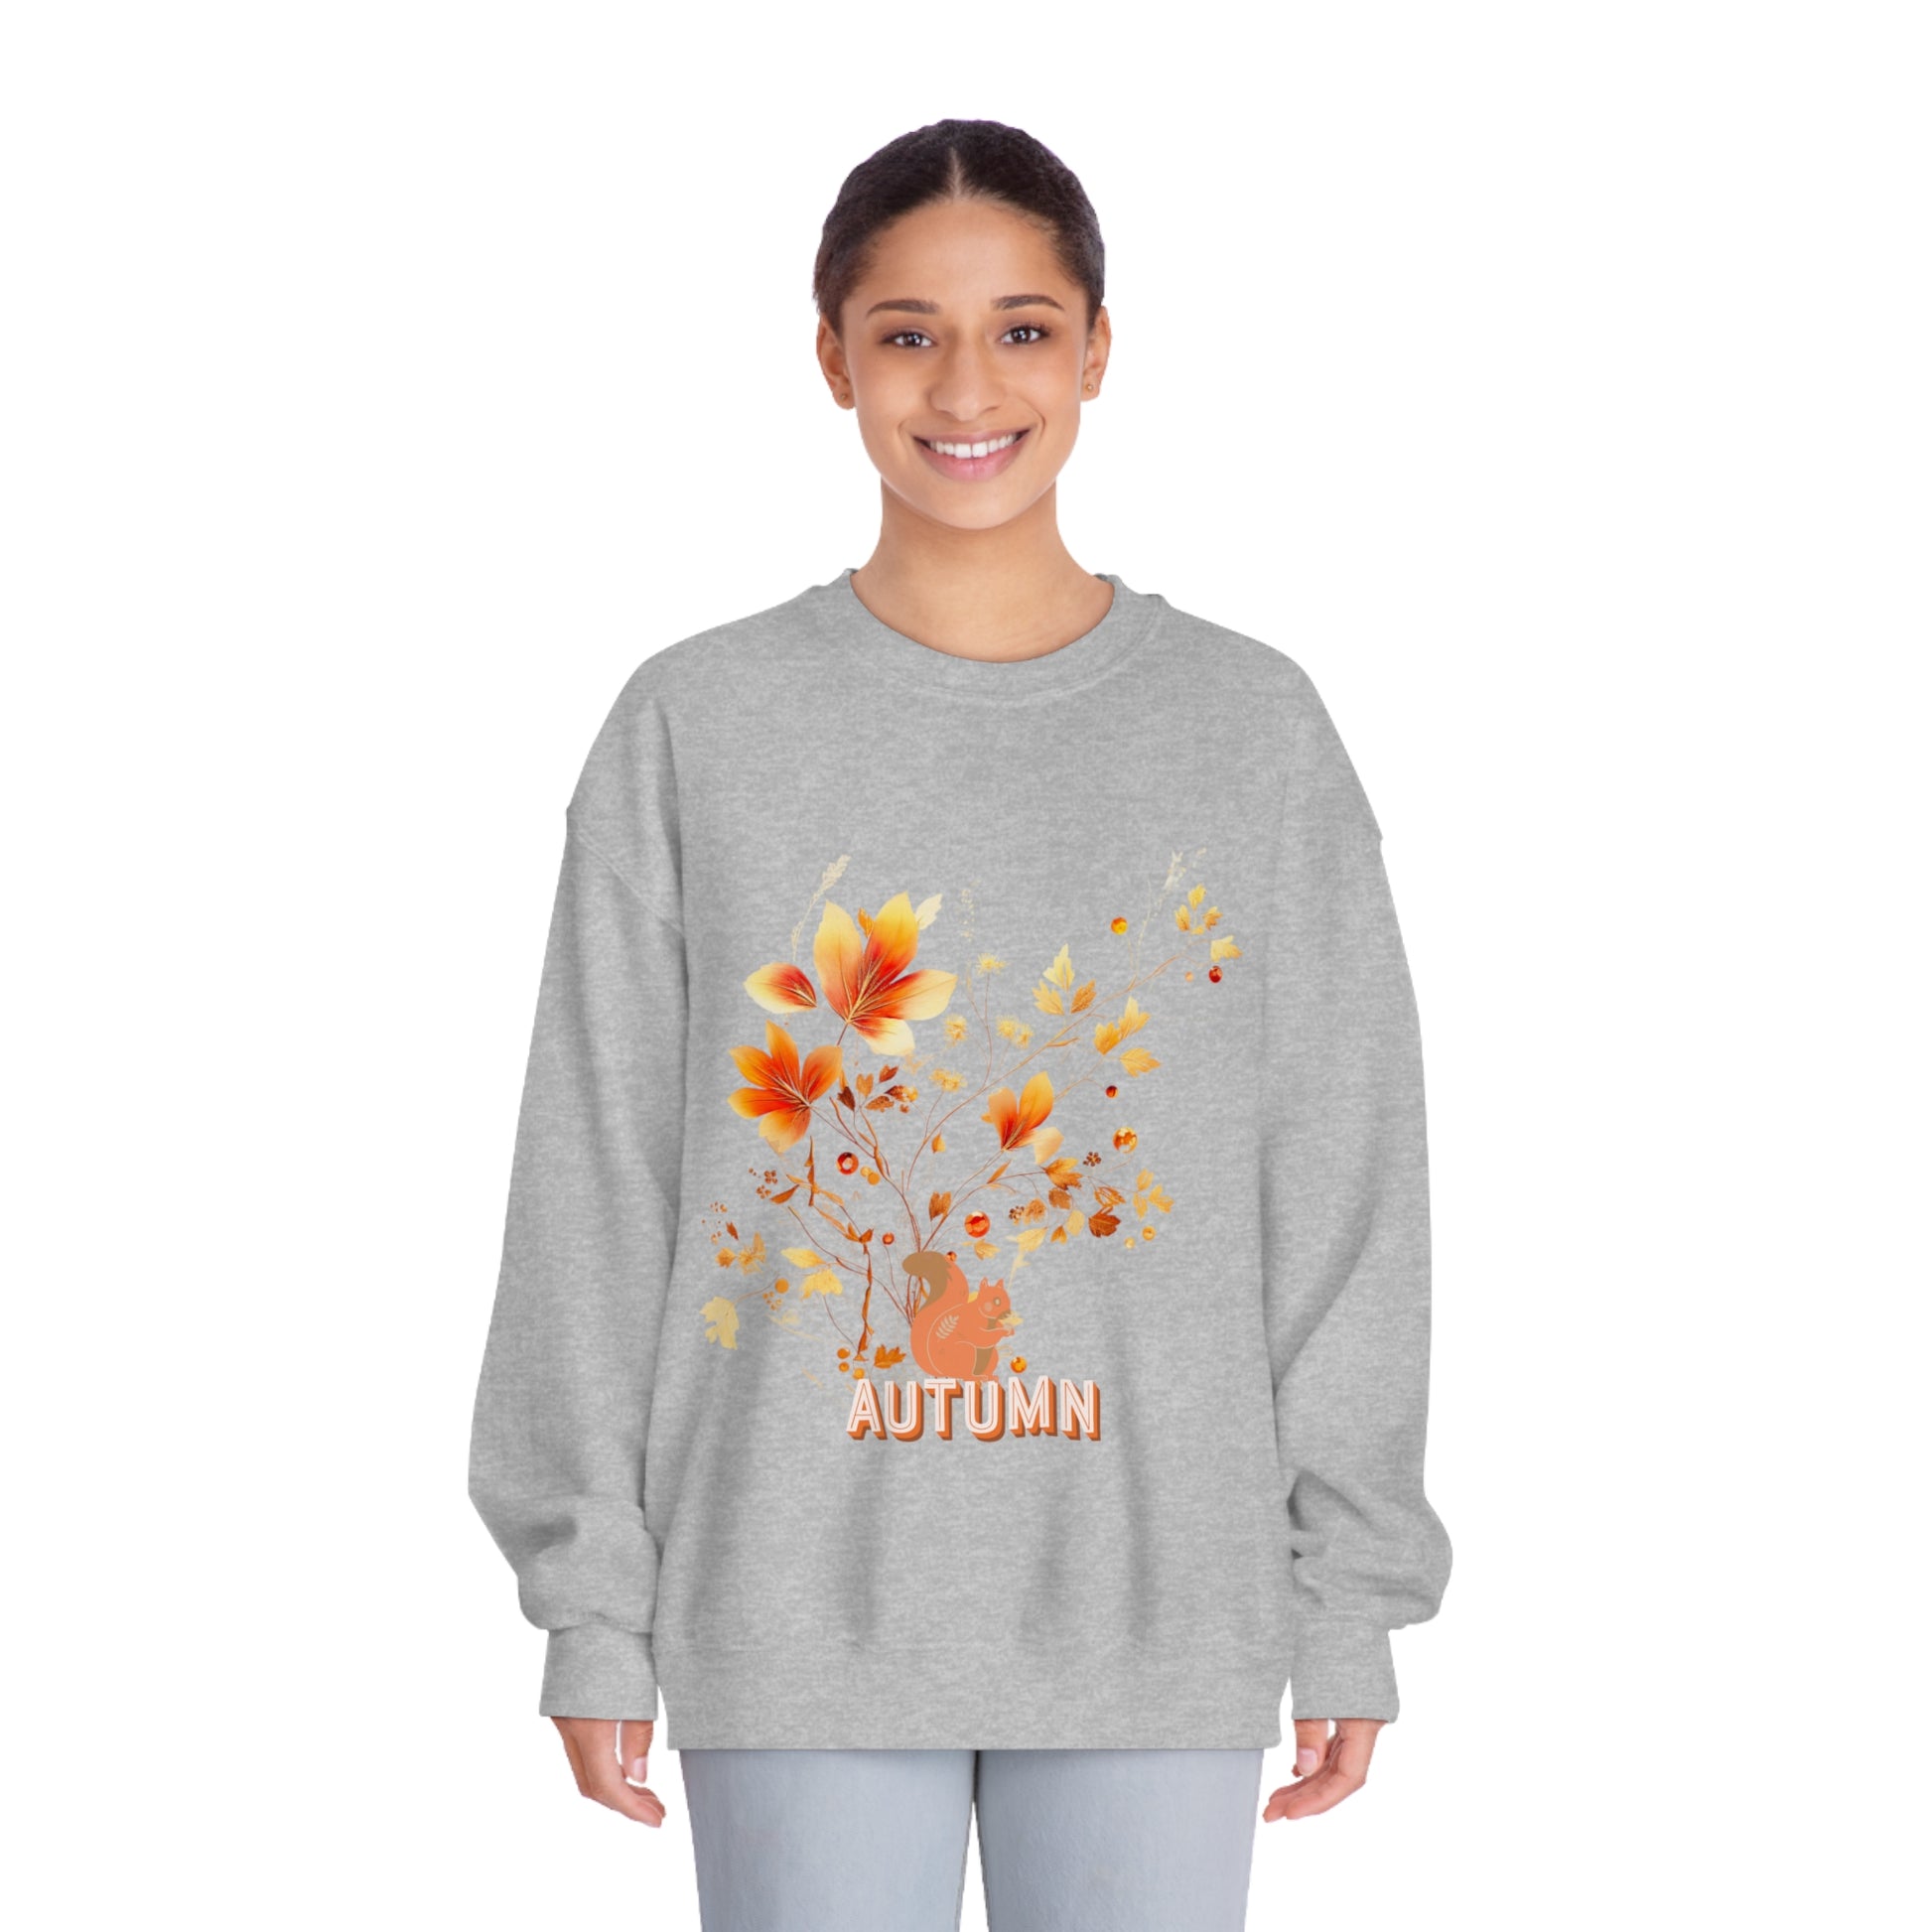 Autumn Leaves Delight Sweatshirt For Autumn Lovers Sweatshirt Sport Grey S 